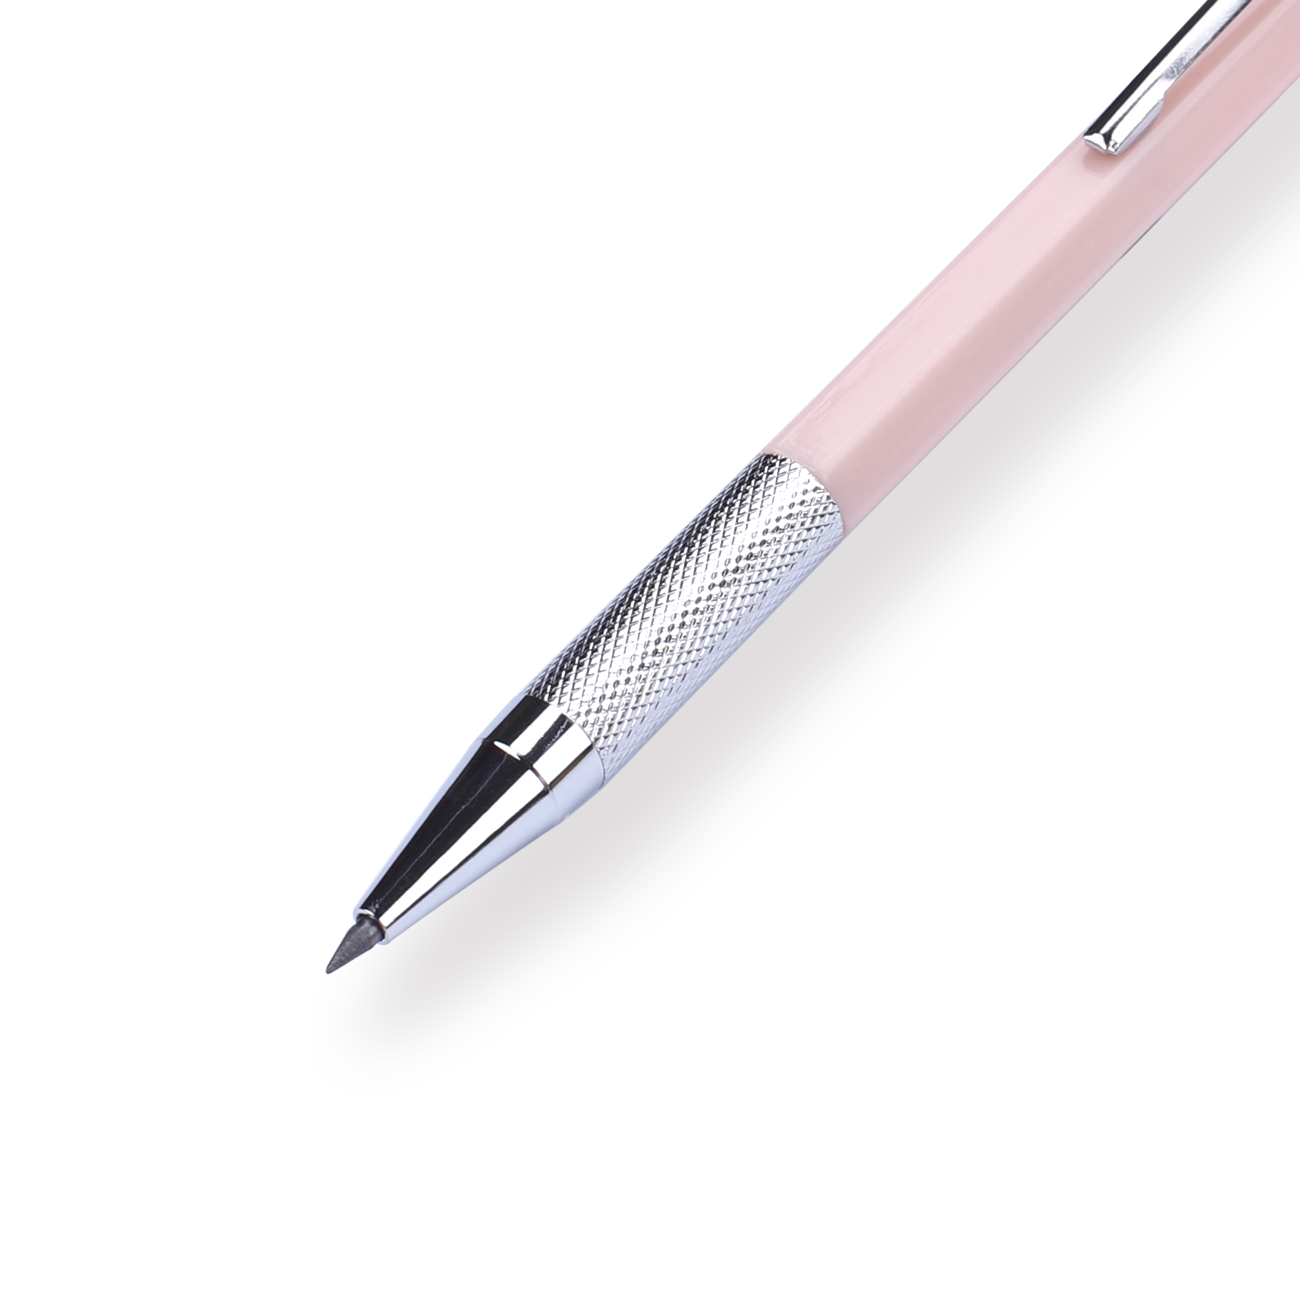 Sakura Mechanical Pencil - 2.0 mm - Pink - Stationery Pal